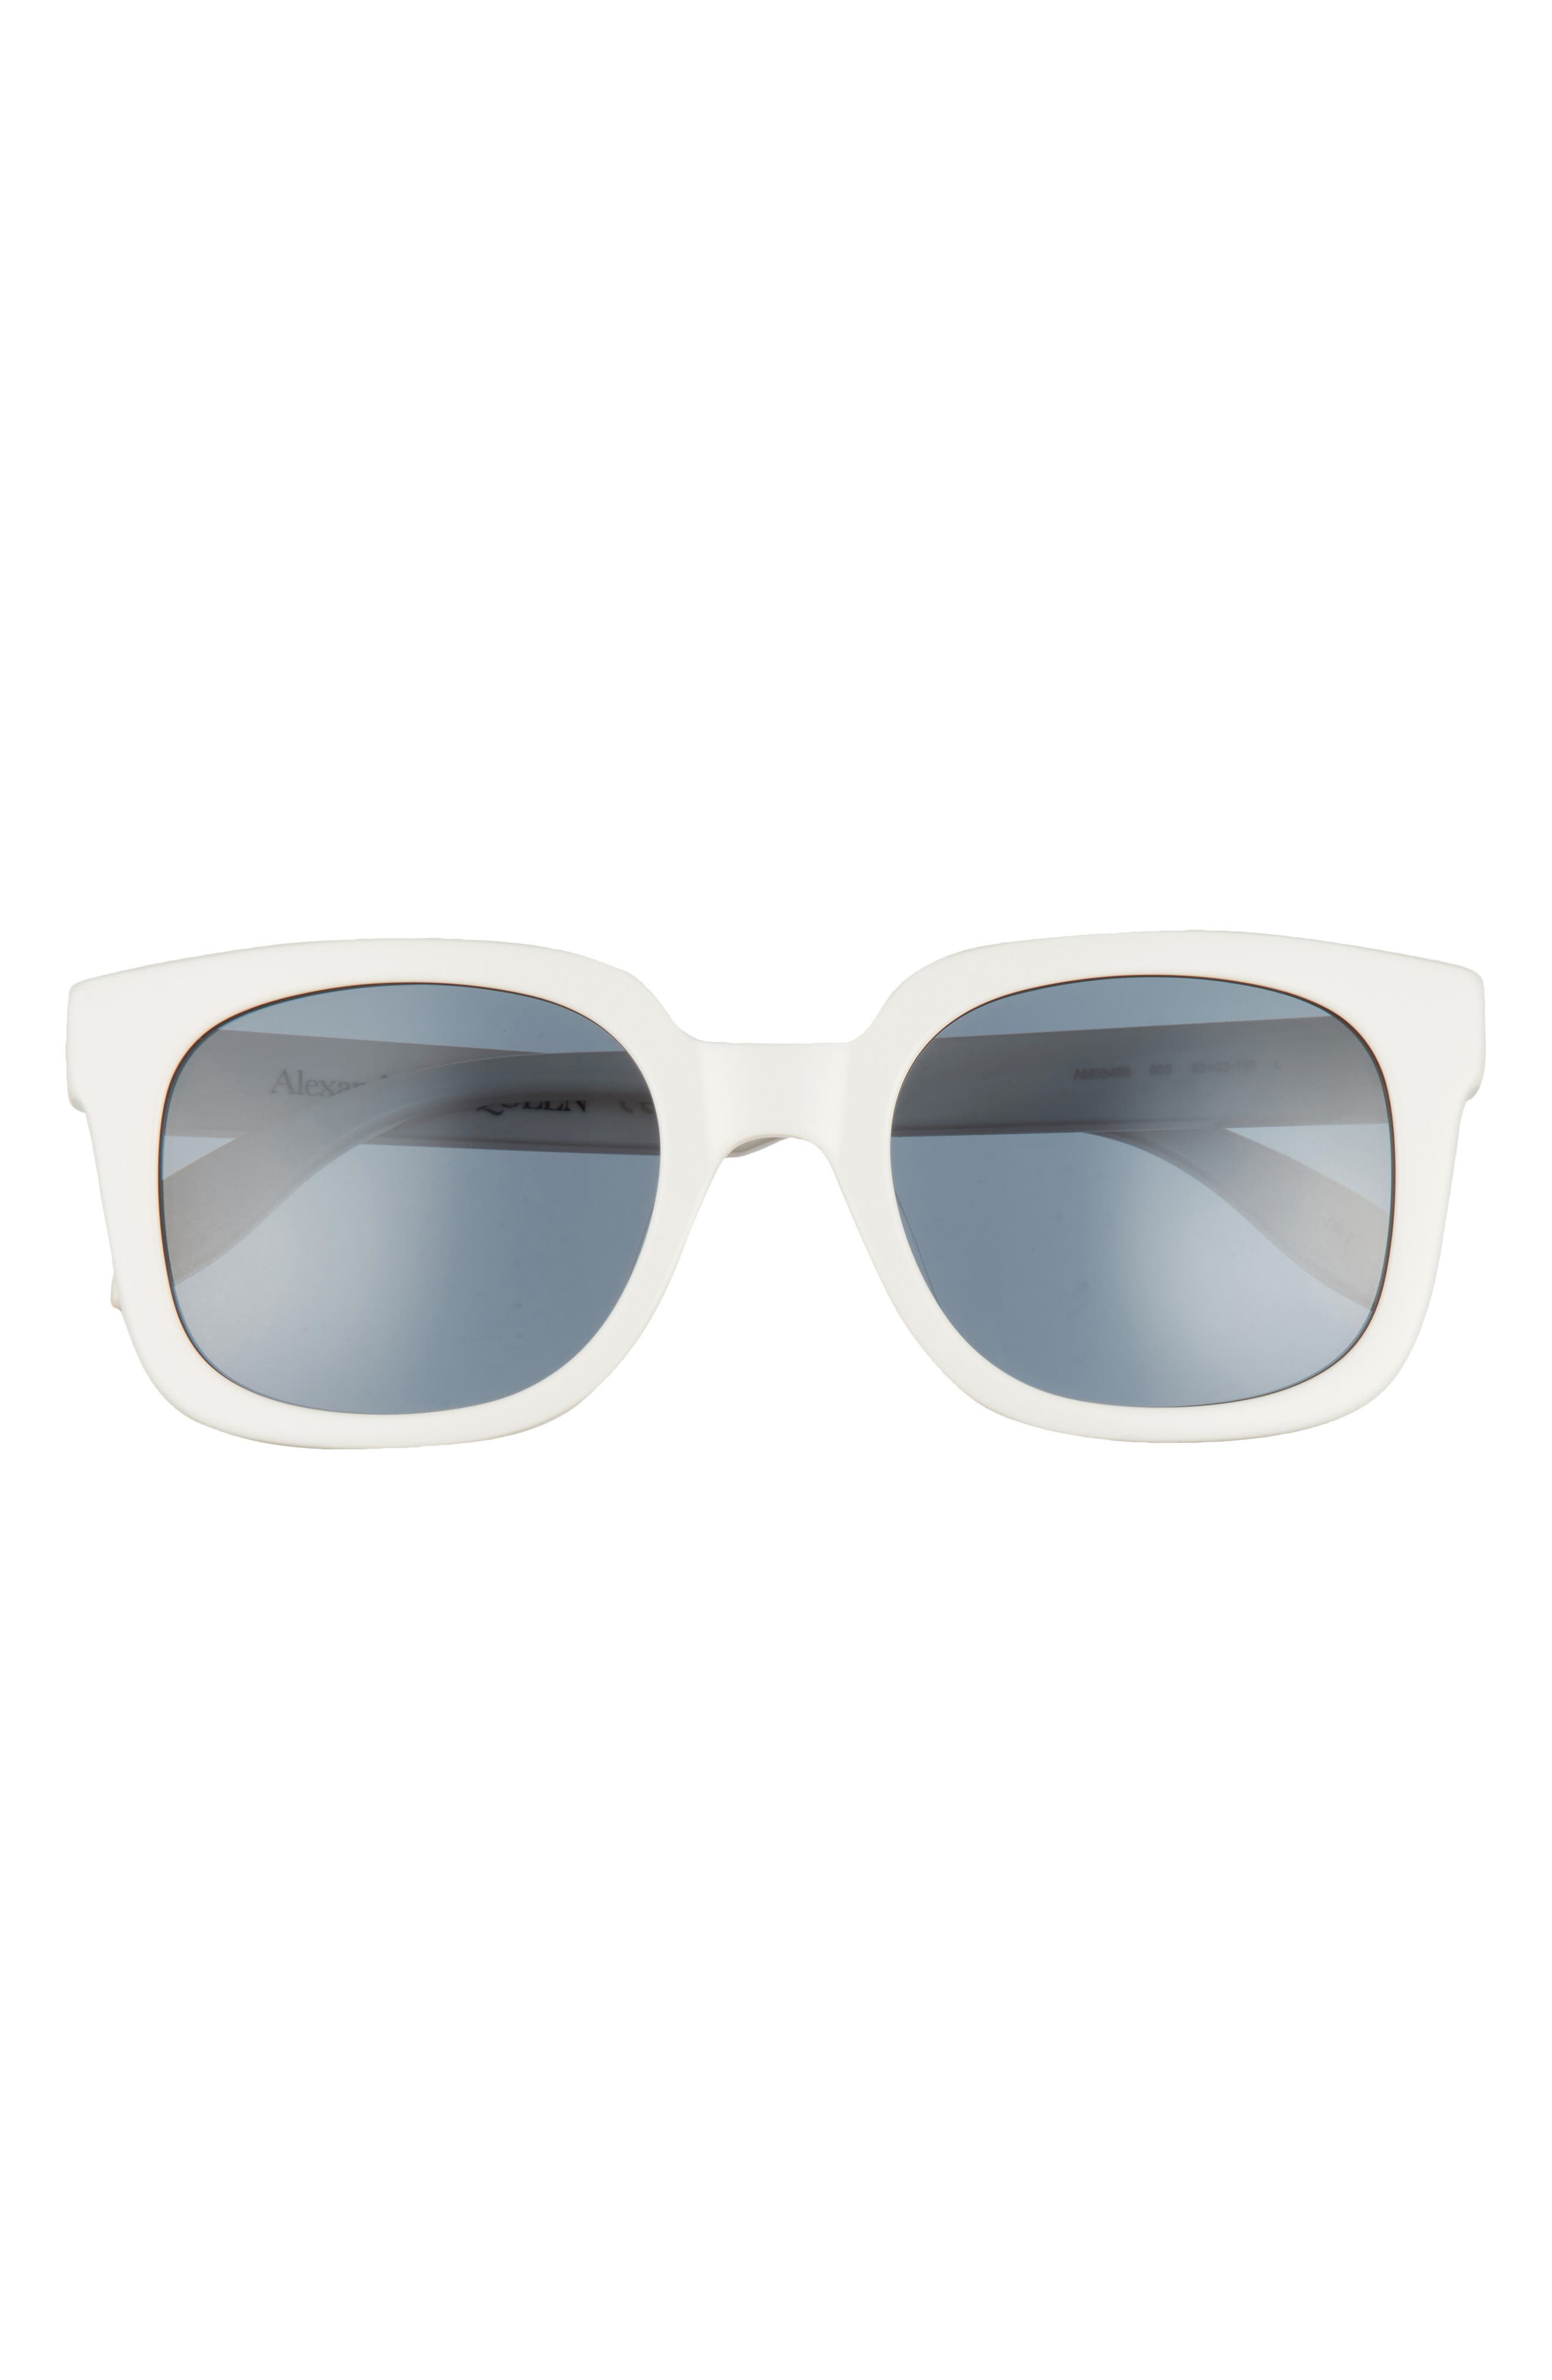 Alexander McQueen 53mm Rectangular Sunglasses in Ivory at Nordstrom